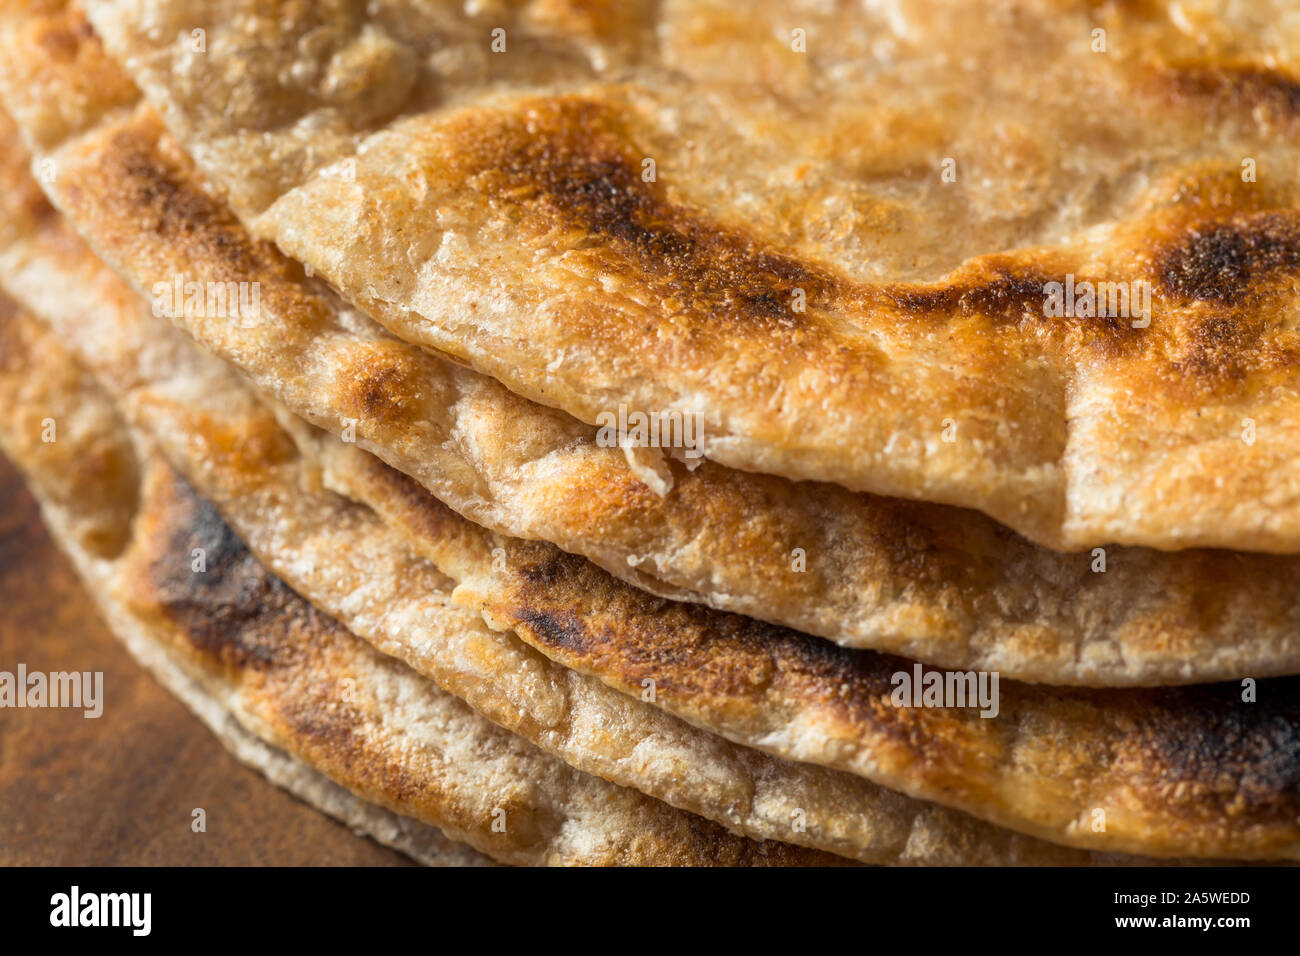 Homemade Indian Roti Chapati Bread Ready to Eat Stock Photo